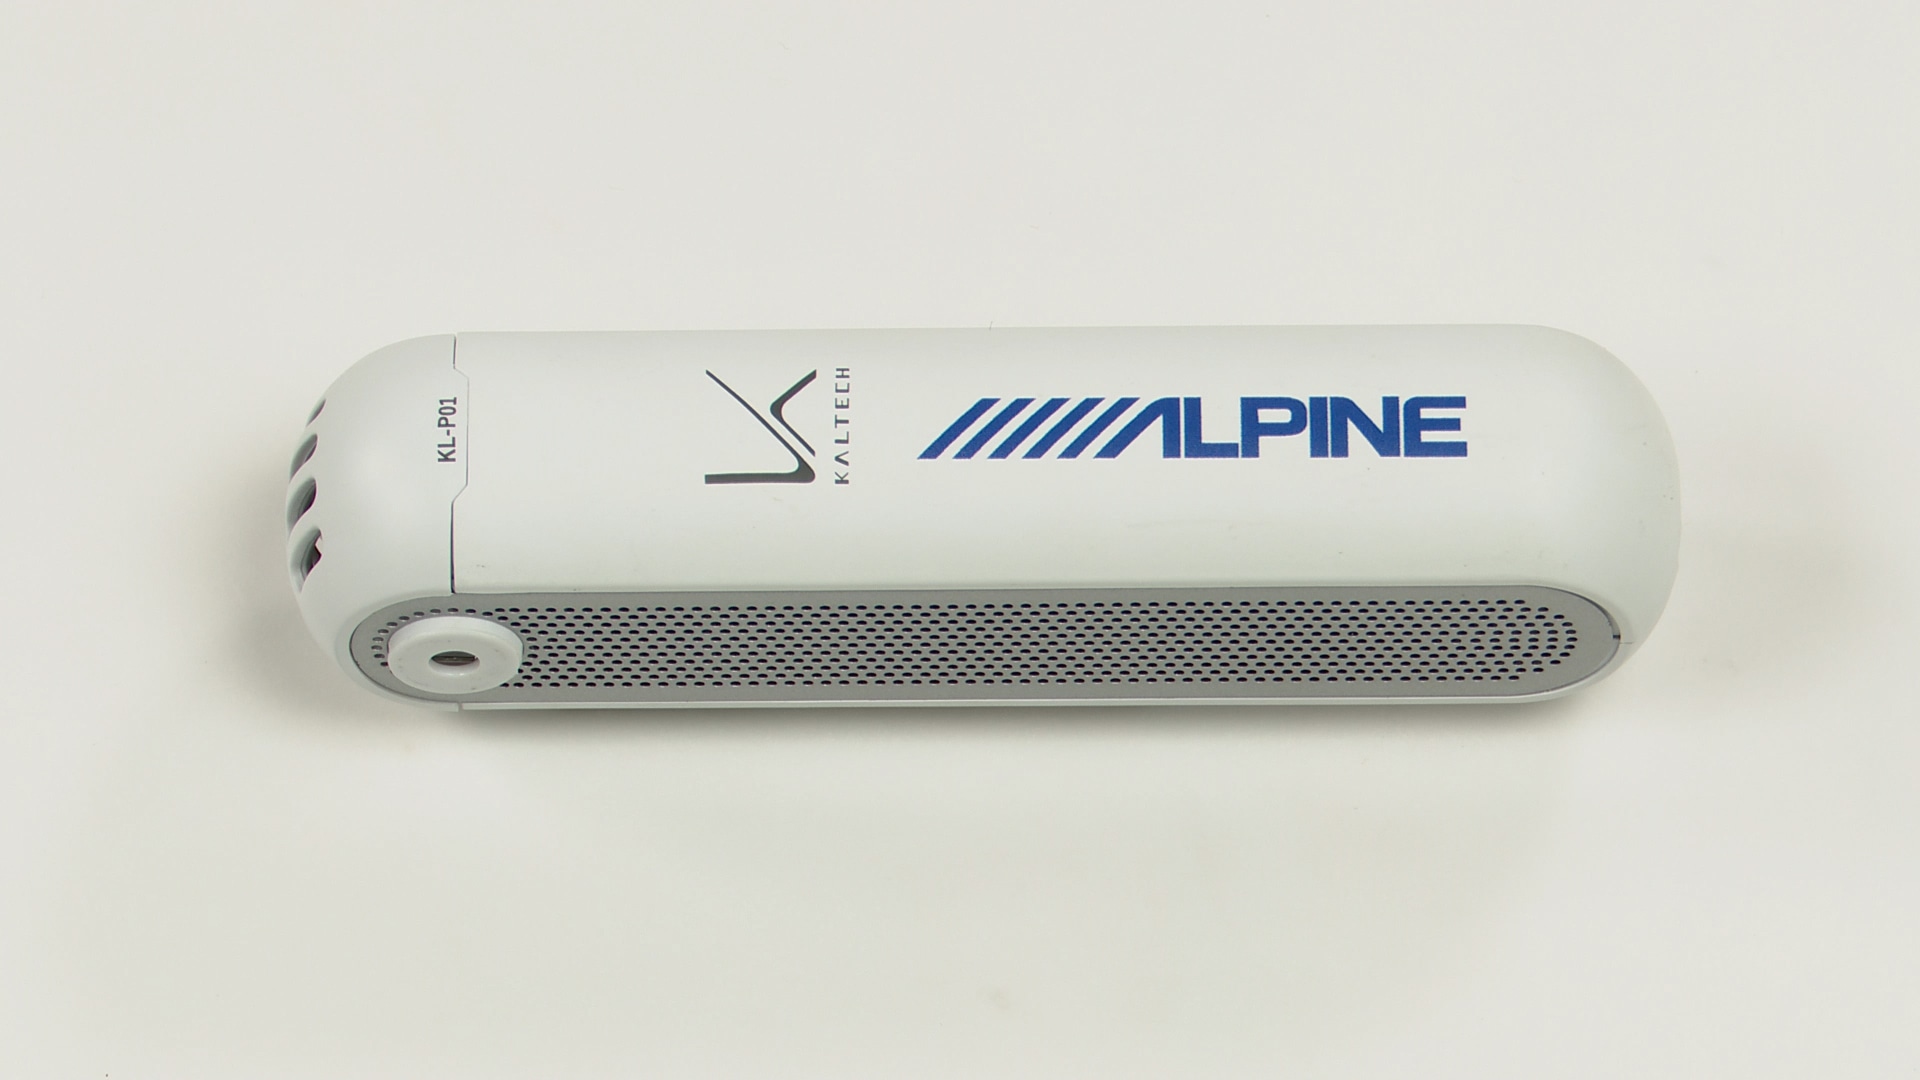 最上級品カルテック 光触媒 除菌・脱臭機 KL-P01 空気清浄器